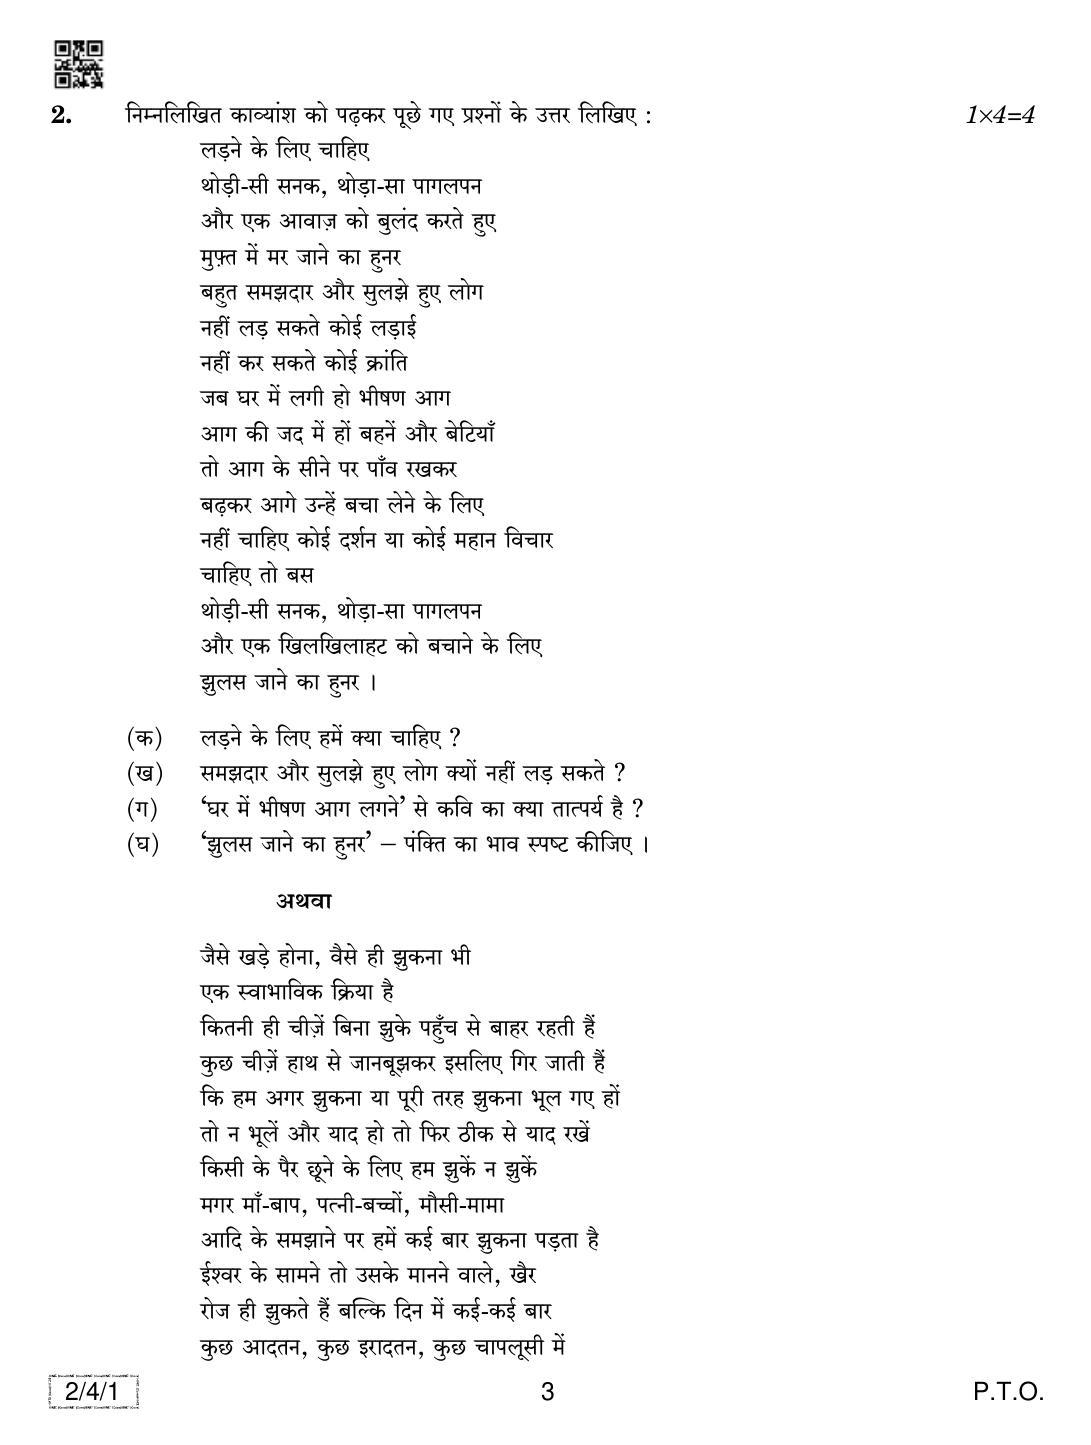 CBSE Class 12 2-4-1 Hindi Core 2019 Question Paper - Page 3